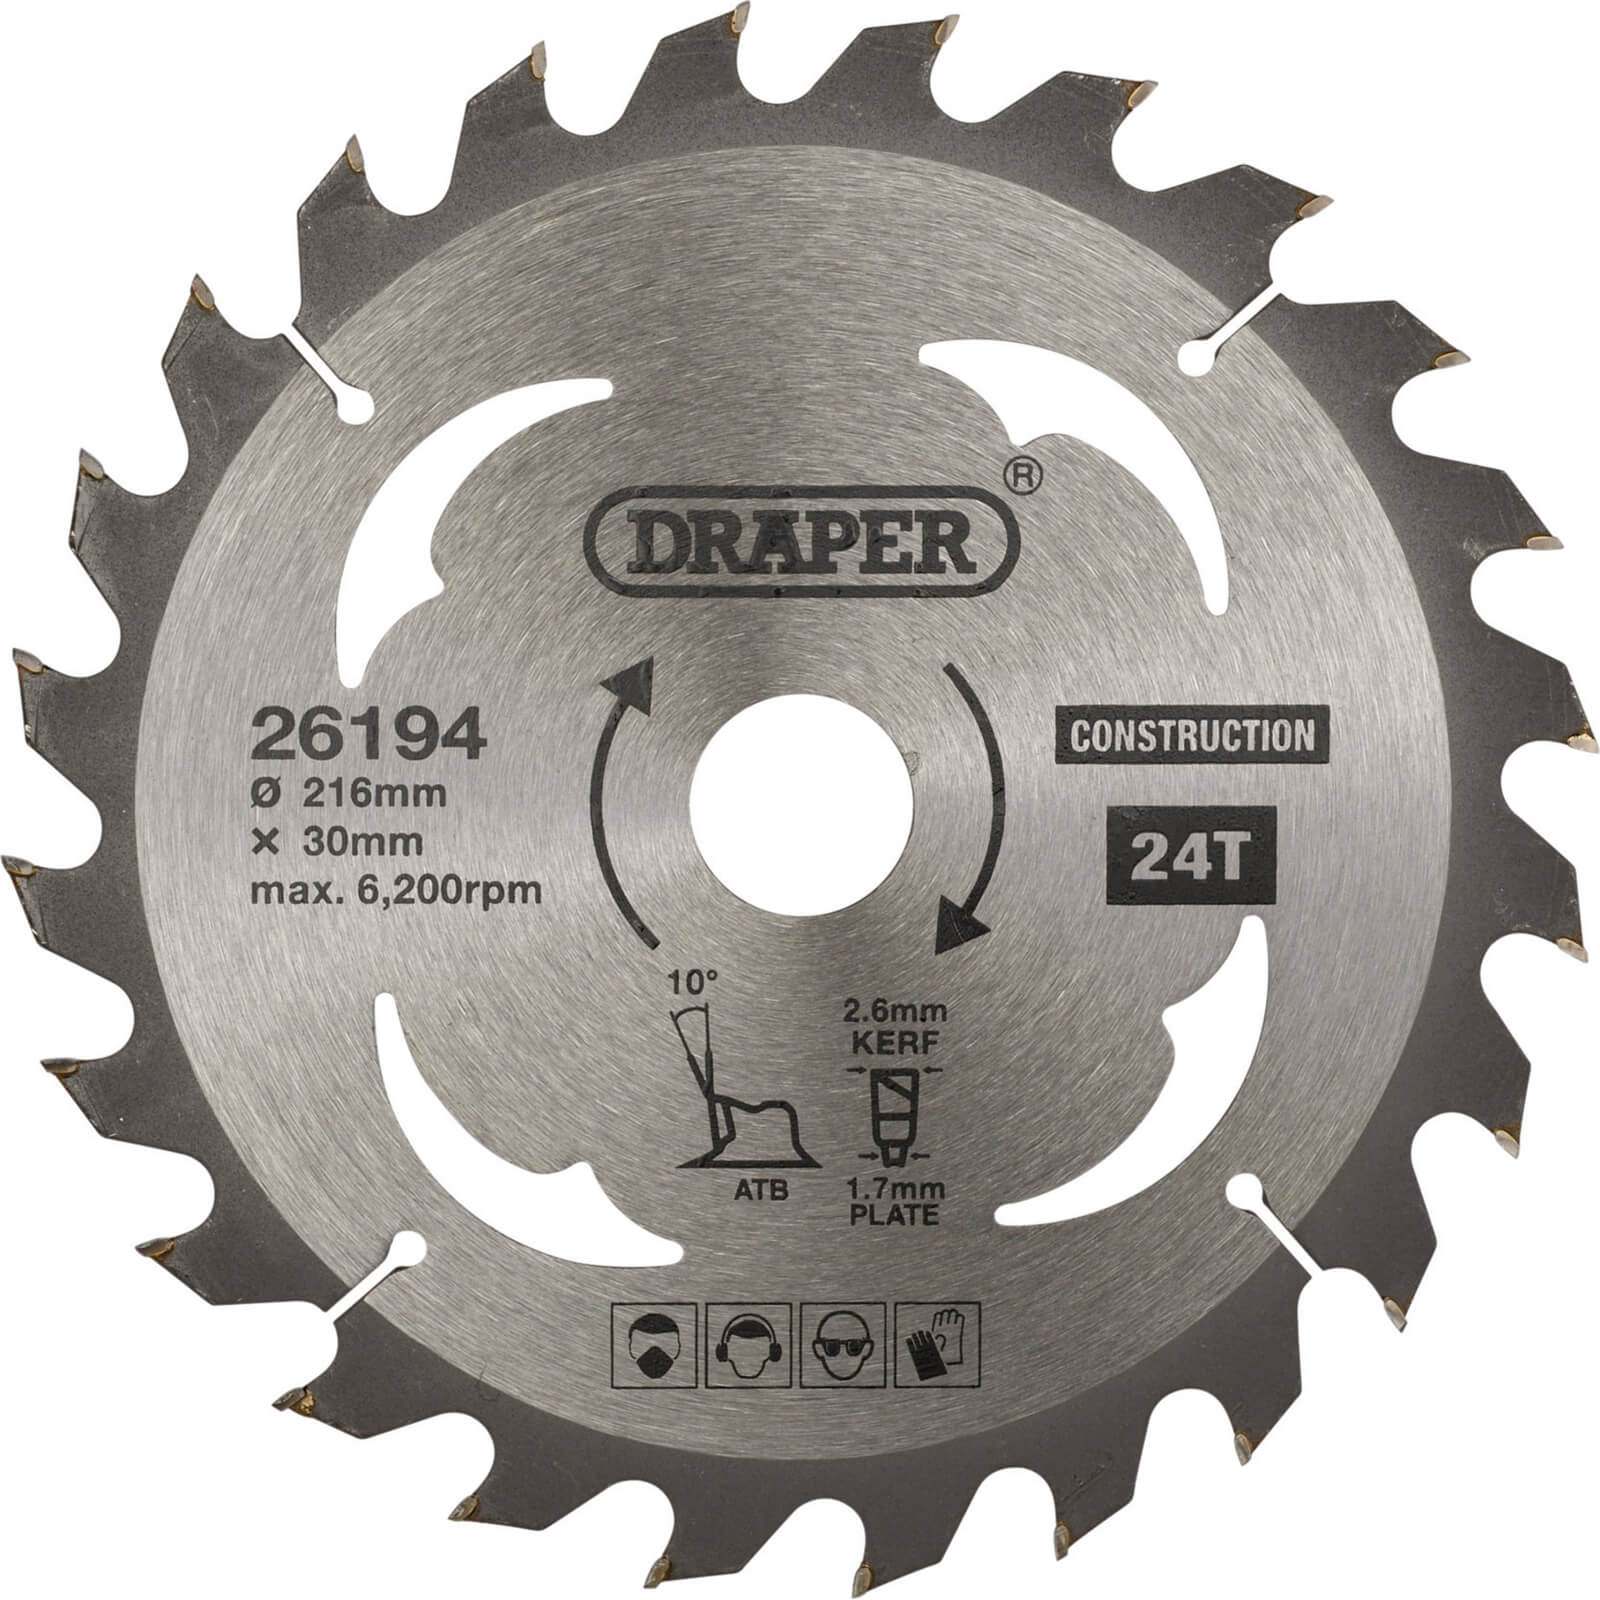 Image of Draper TCT Construction Circular Saw Blade 216mm 24T 30mm